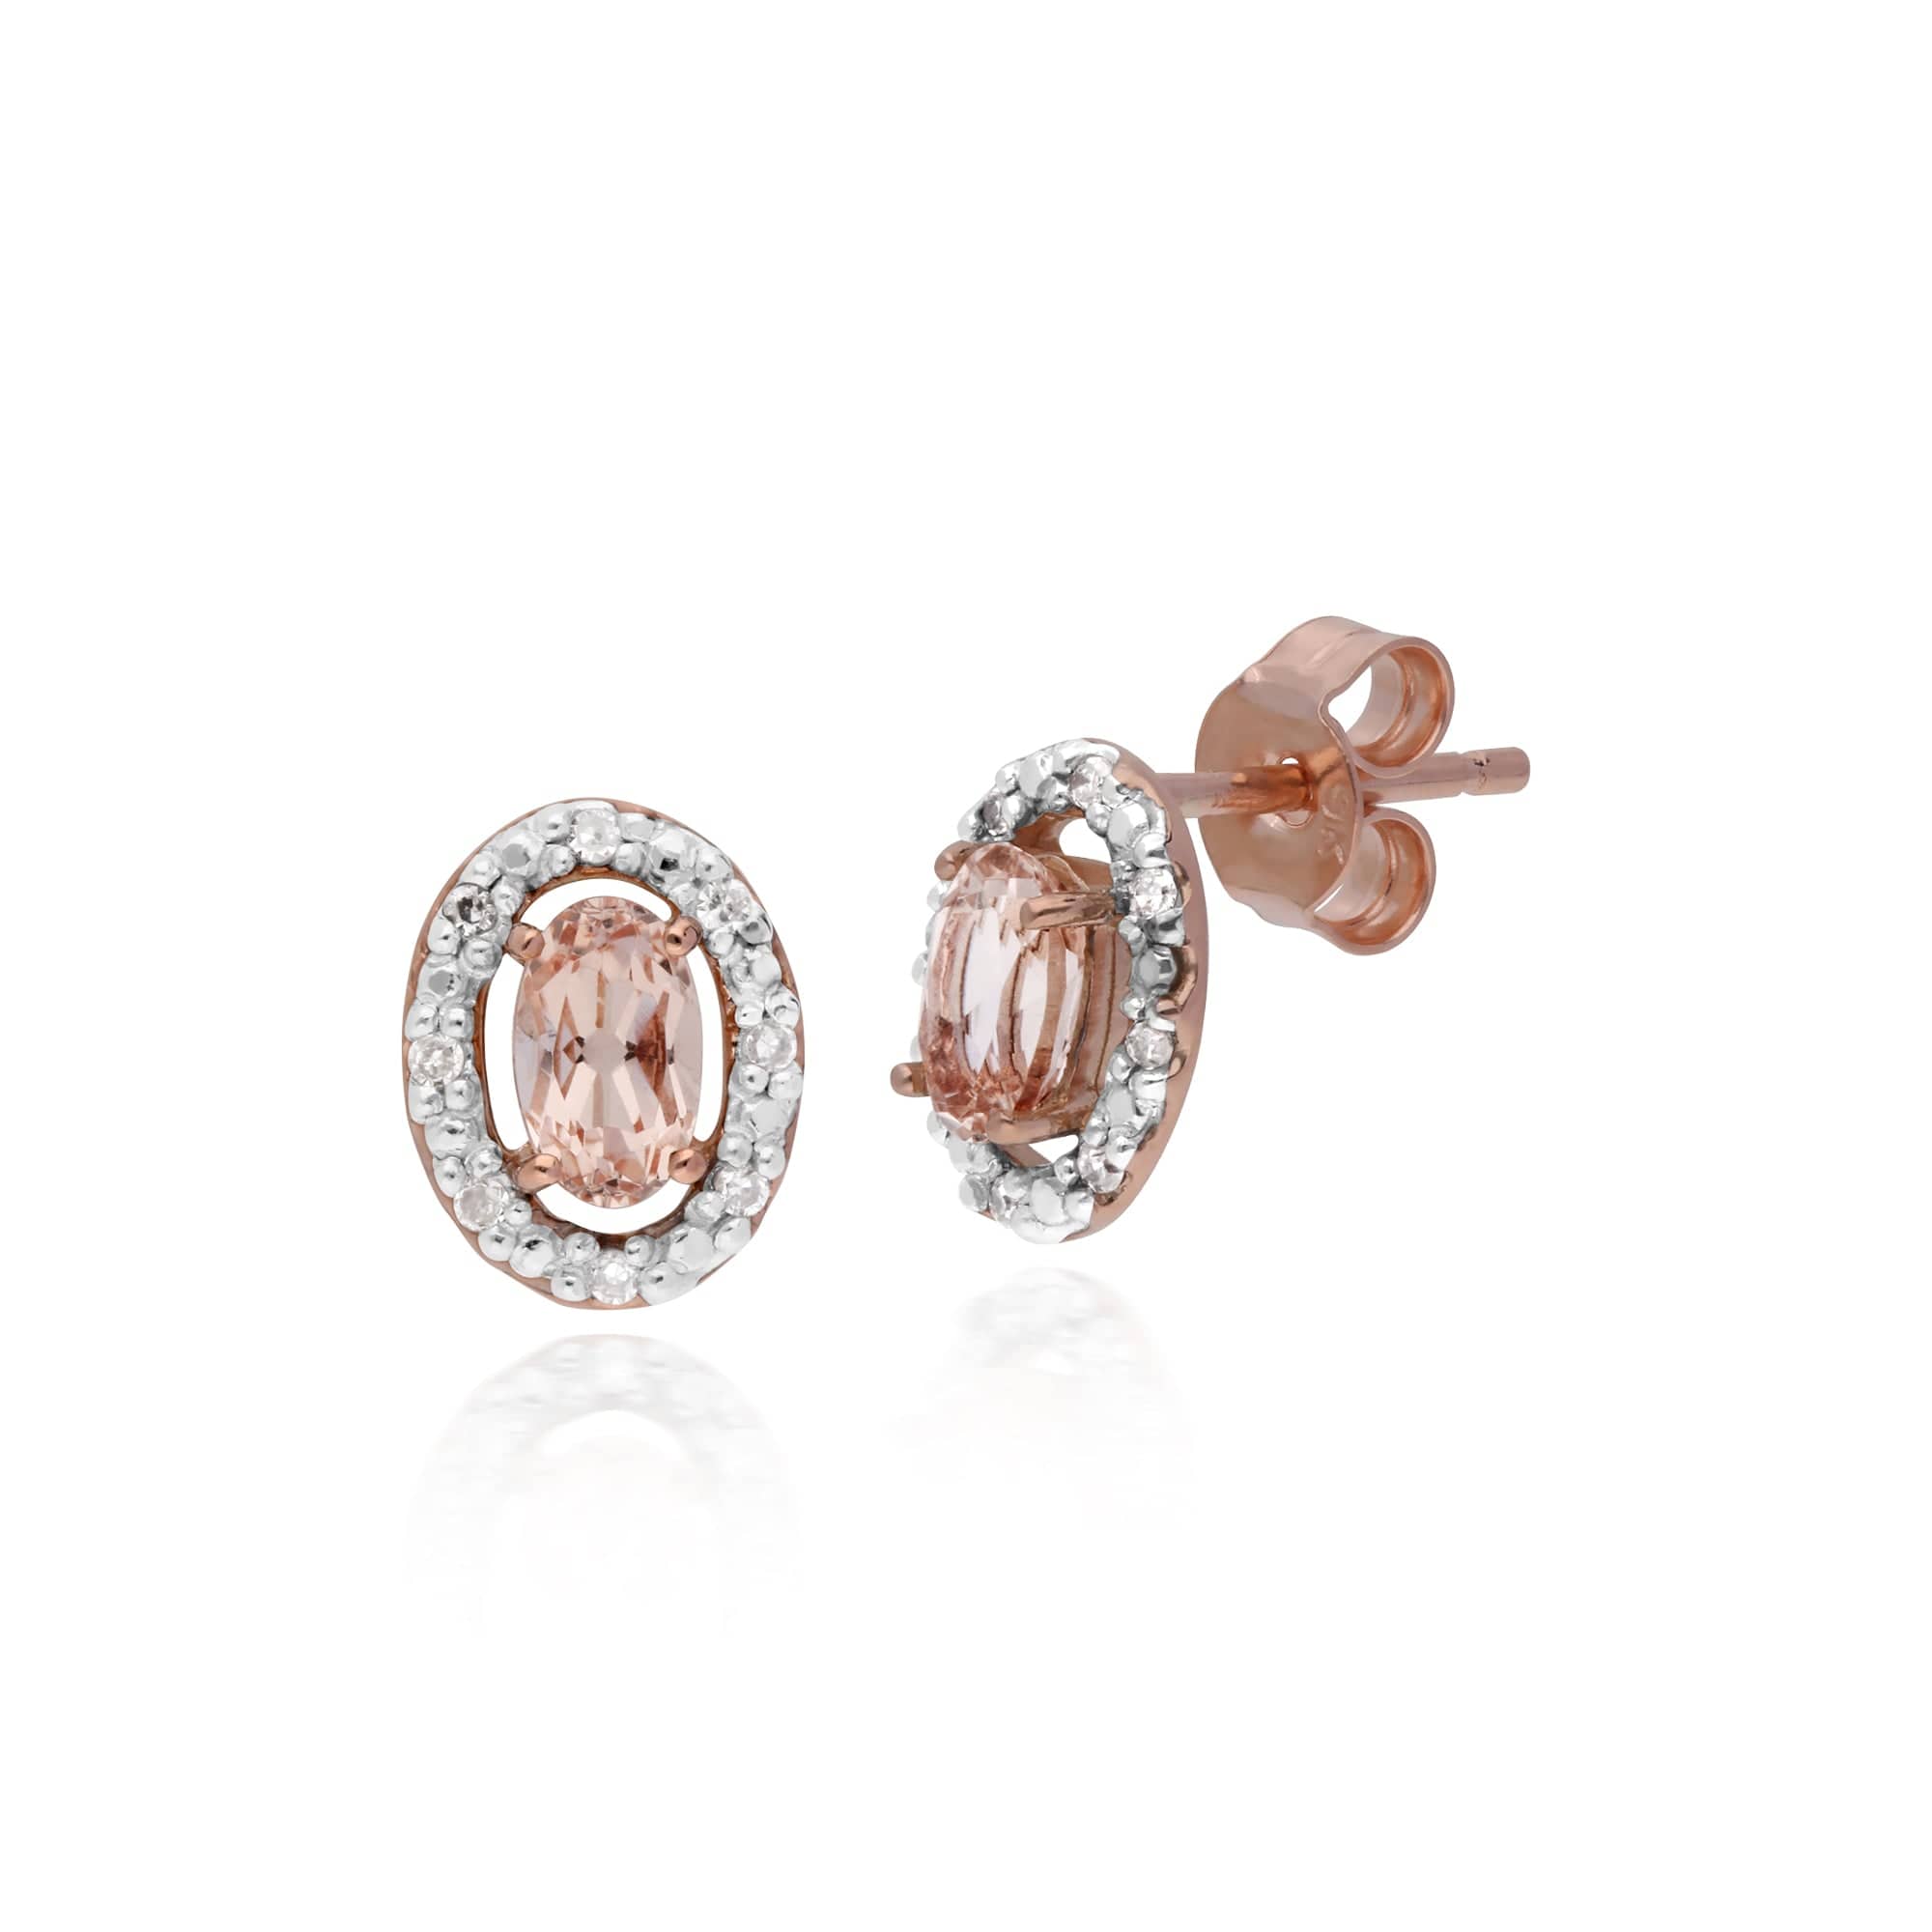 135E1451019-135P1745019 Classic Oval Morganite & Diamond Halo Stud Earrings & Pendant in 9ct Rose Gold 2